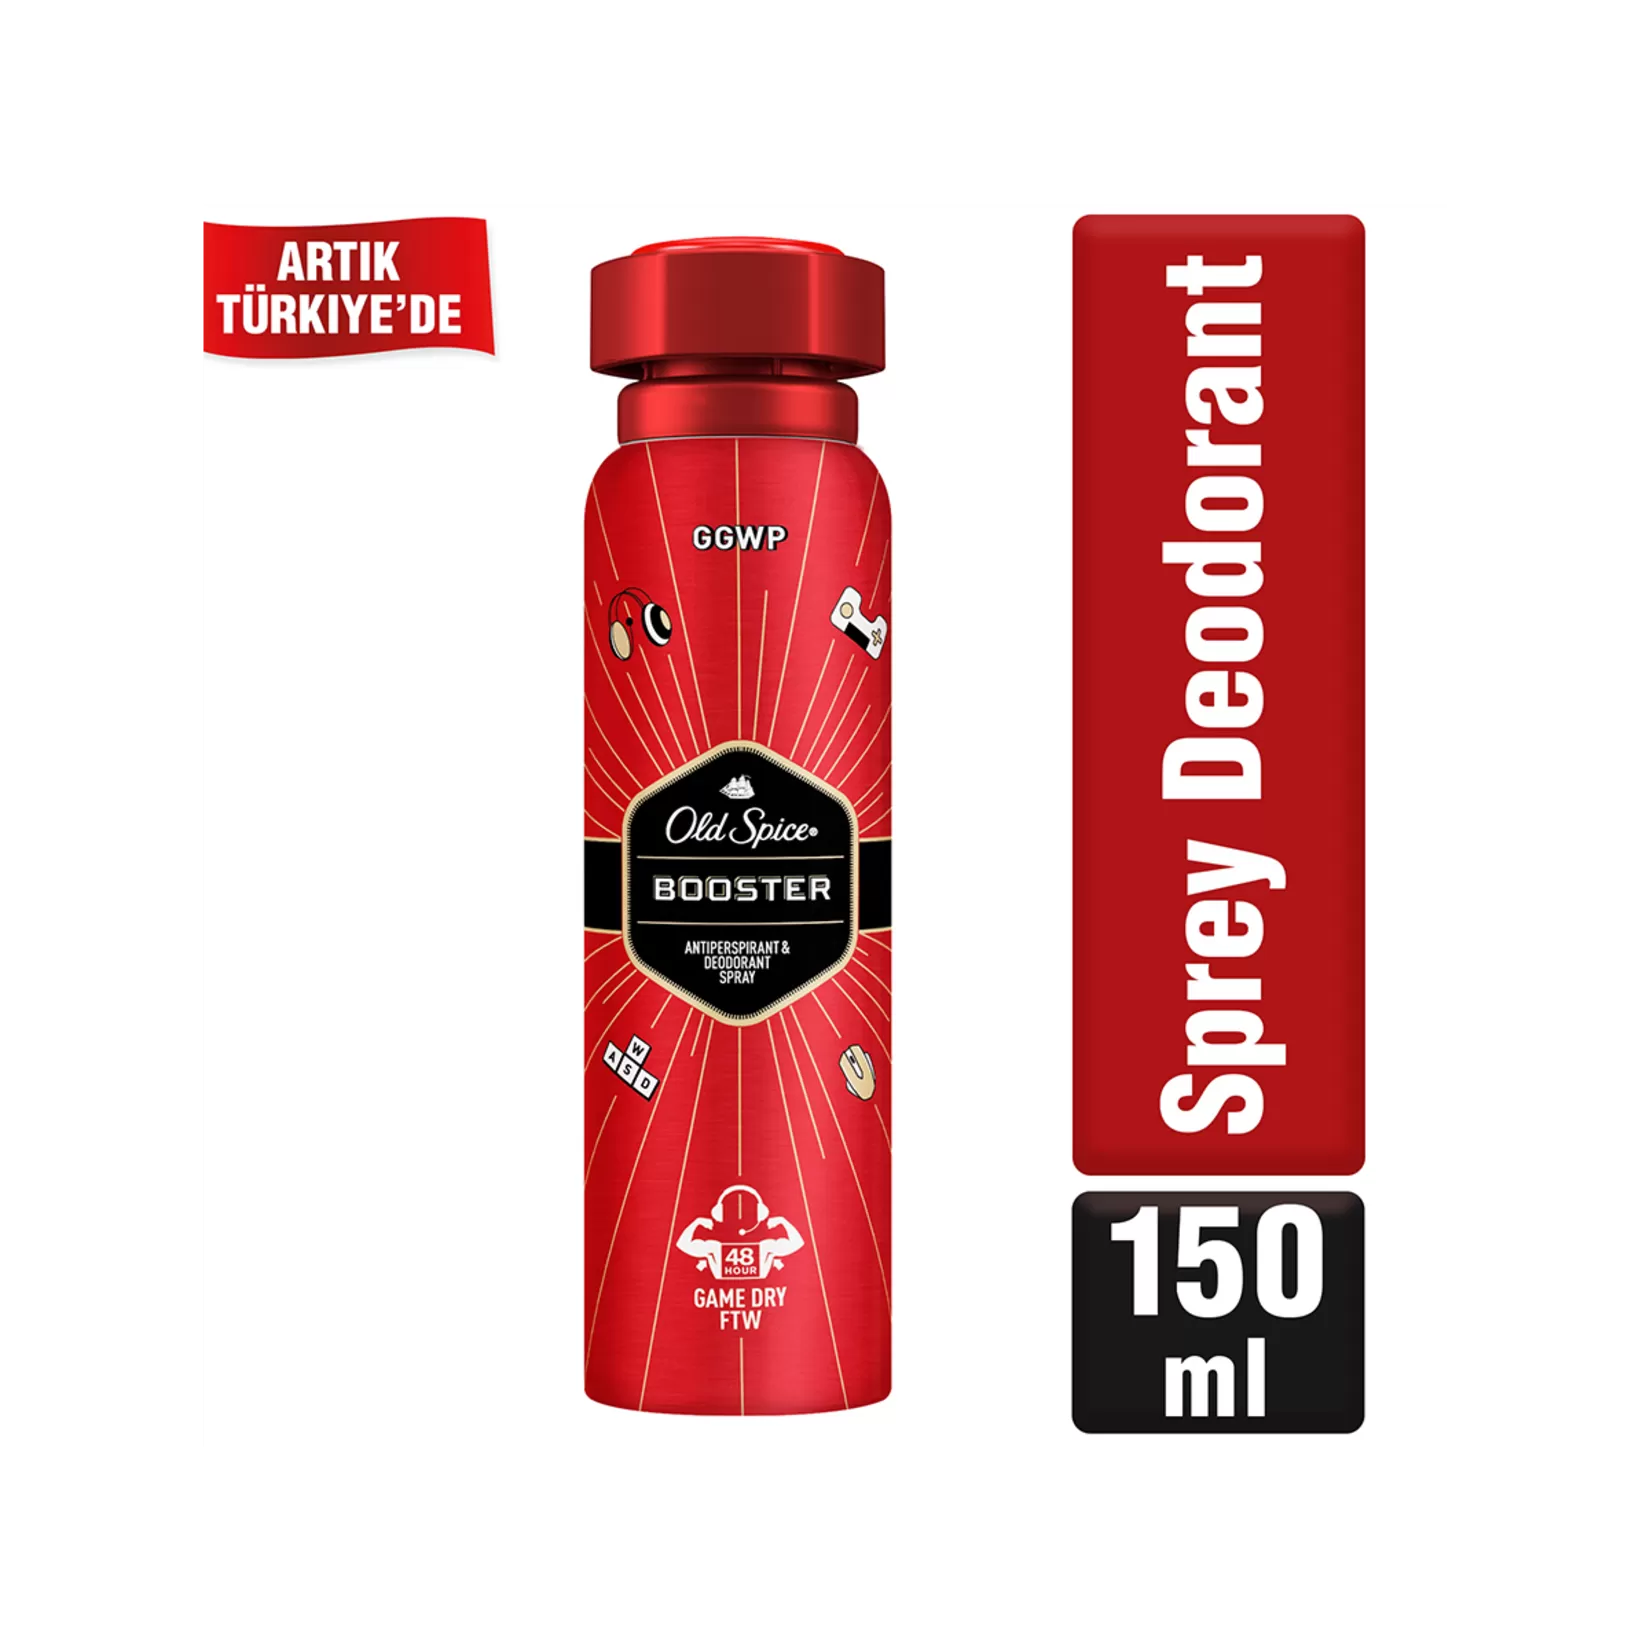 Old Spice Booster Deodorant Sprey 150ml 4 Adet